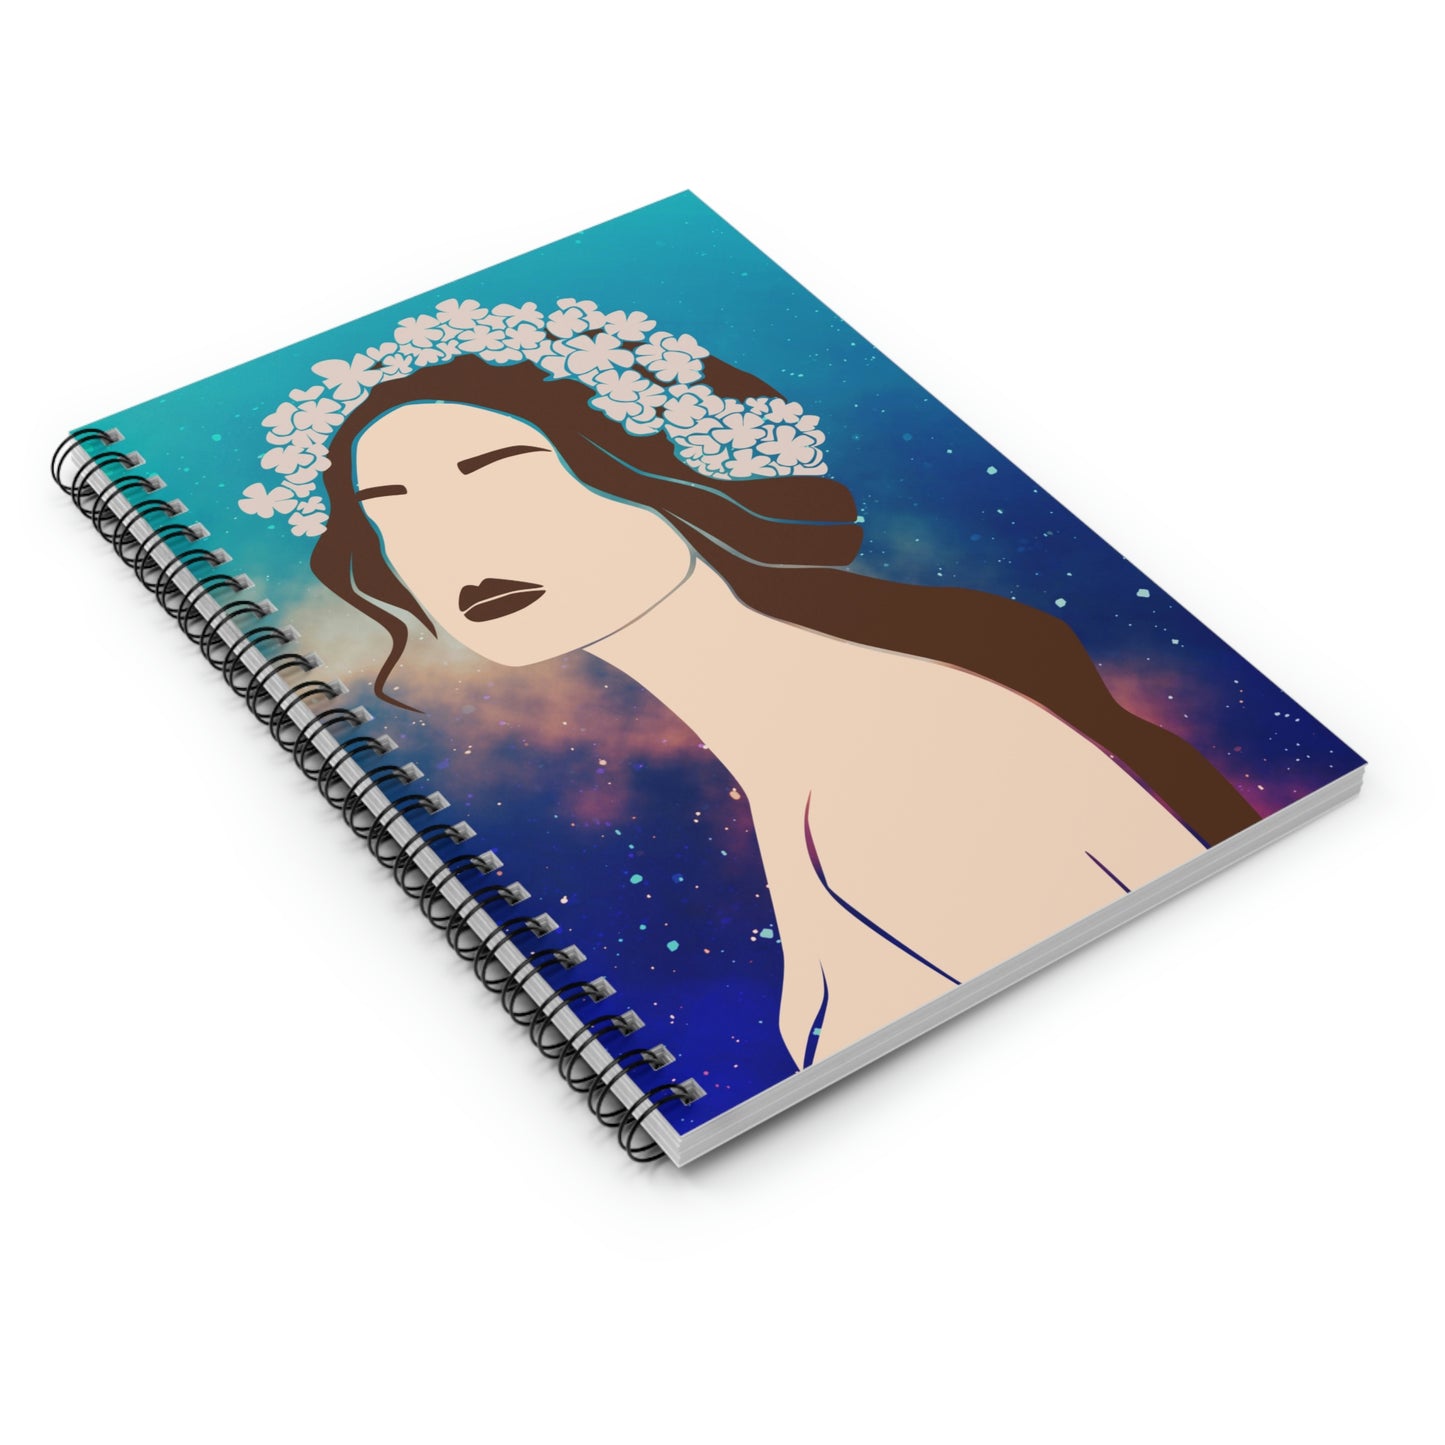 Goddess in the Stars 2 Spiral Notebook/Journal